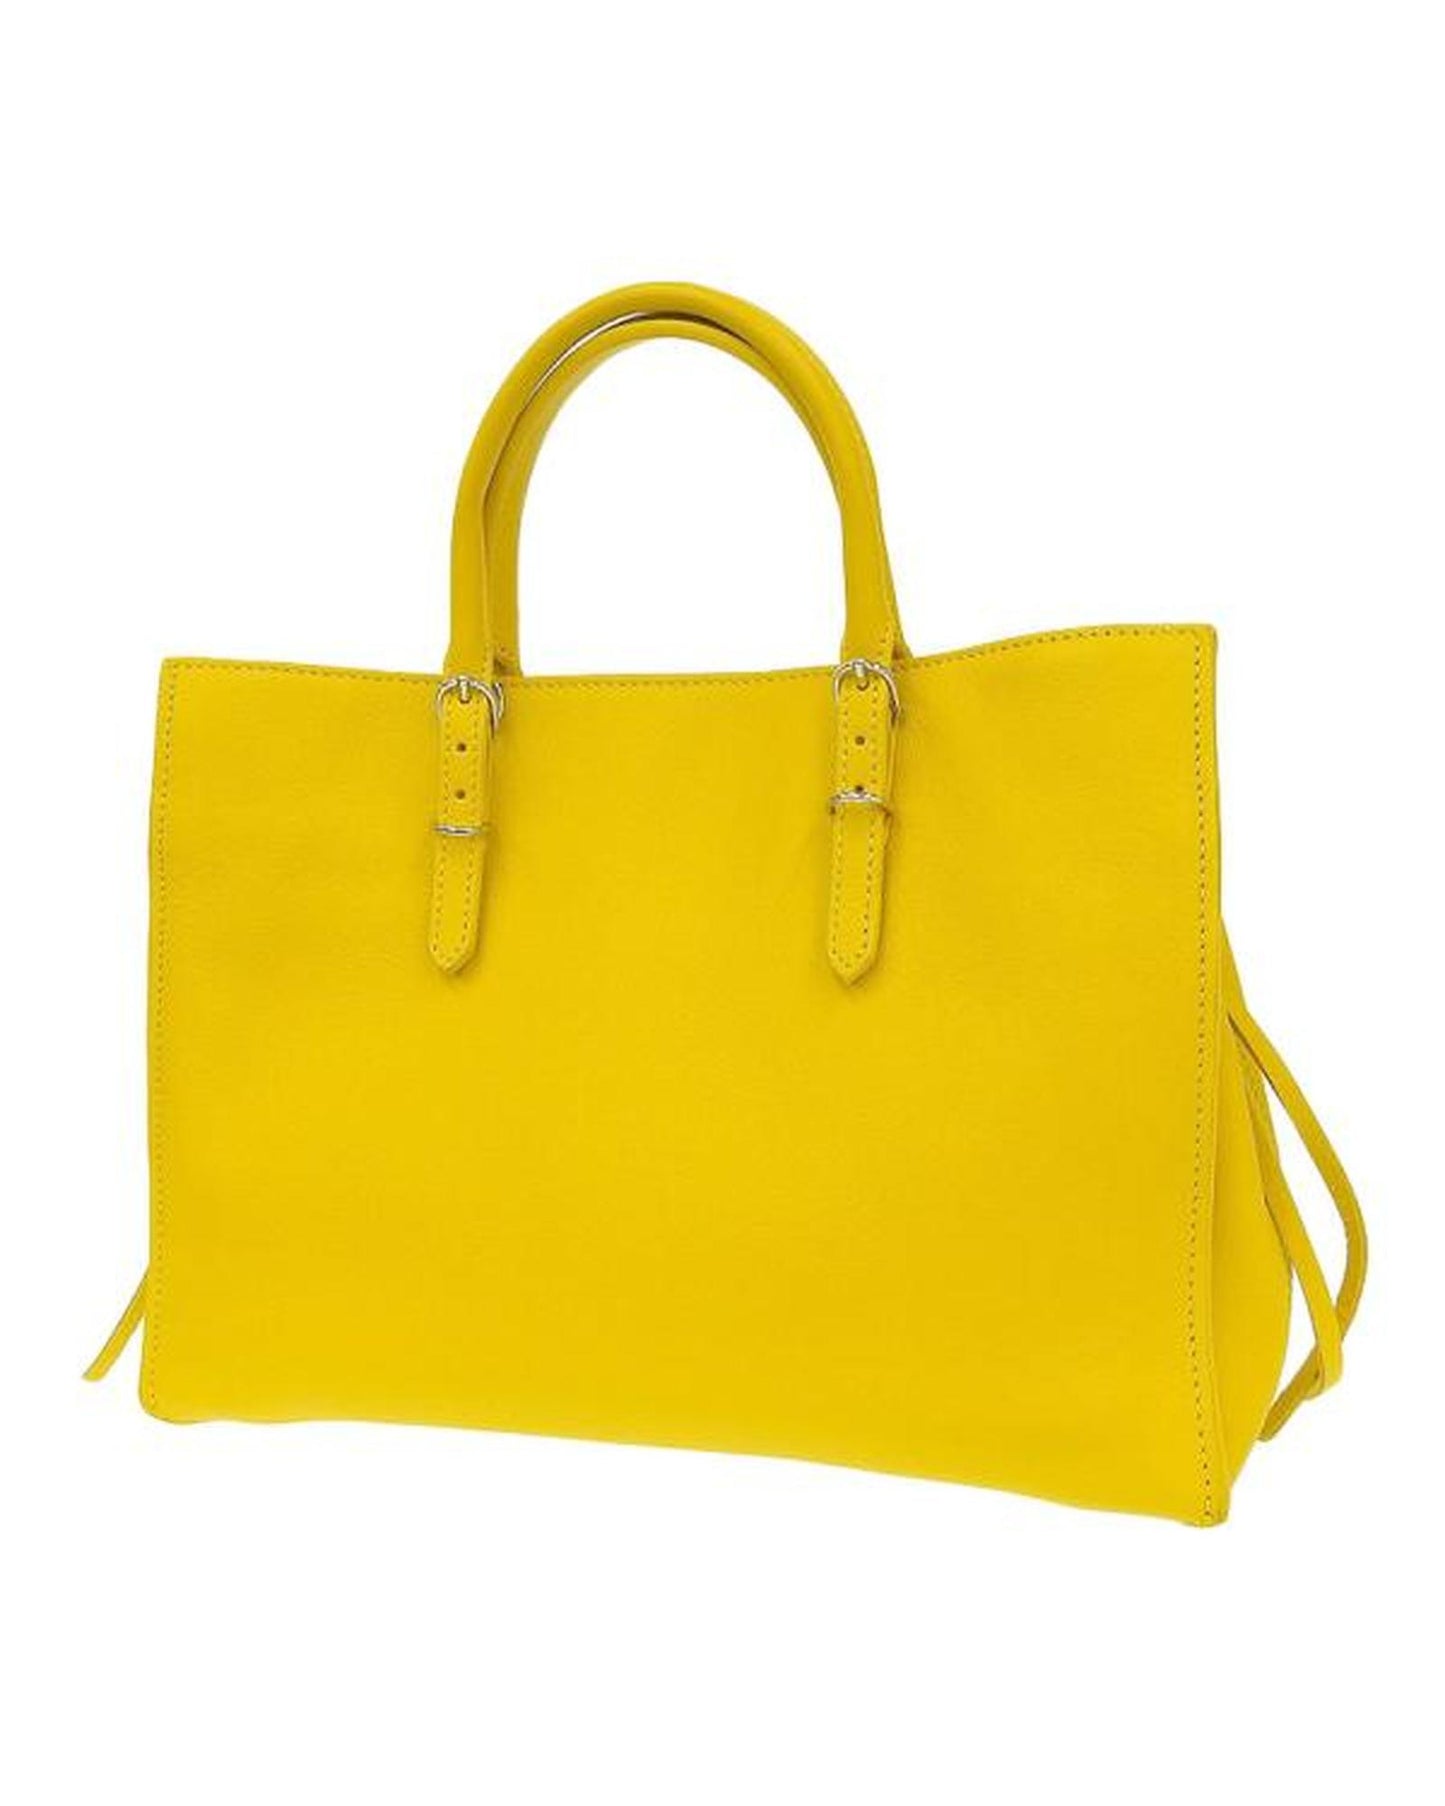 Balenciaga Women's Yellow Zip Around Tote Bag in A Condition in Yellow